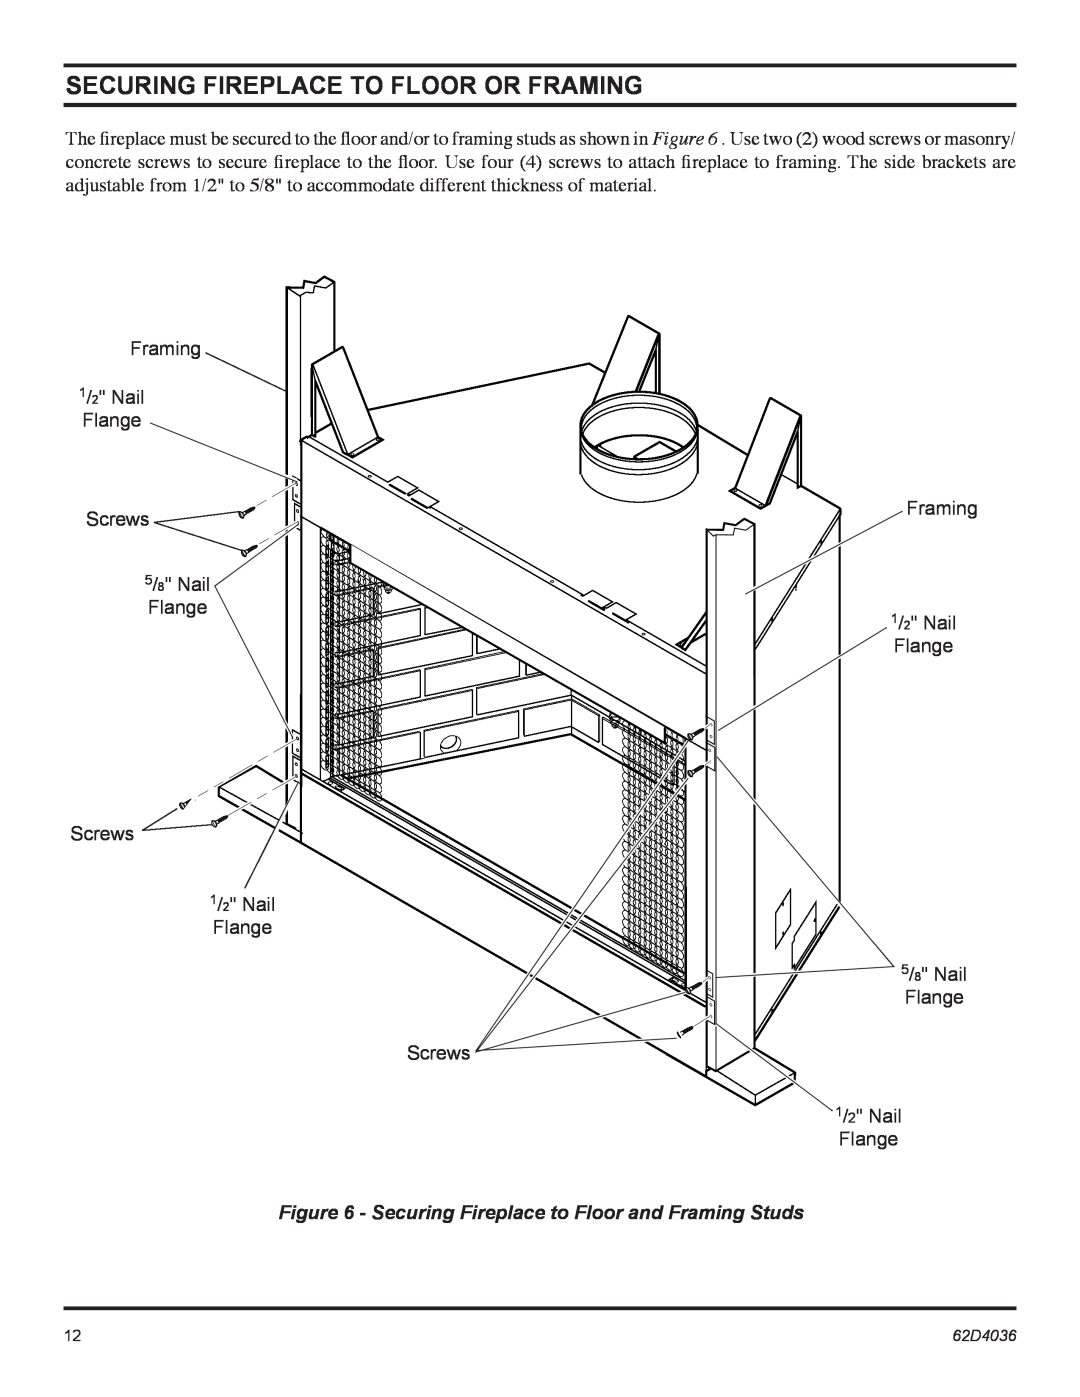 Monessen Hearth SBV400, SBV500 manual Securing Fireplace To Floor Or Framing, Framing 1/2 Nail Flange Screws 5/8 Nail Flange 